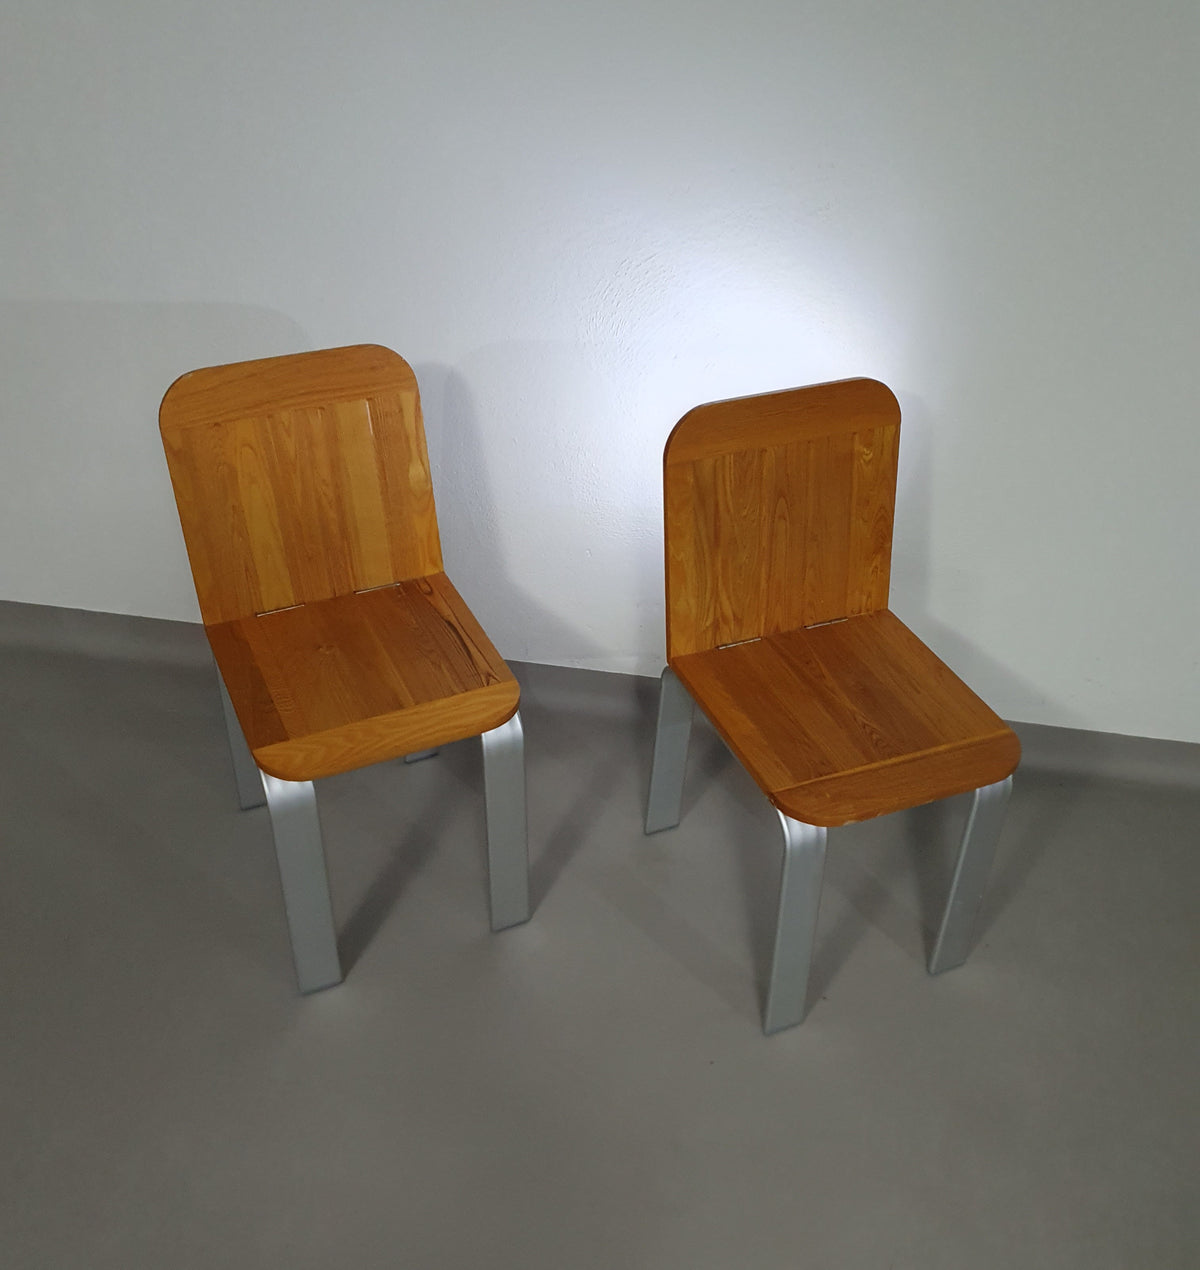 2 x folding chair by Nicolai Carels for Osini '90